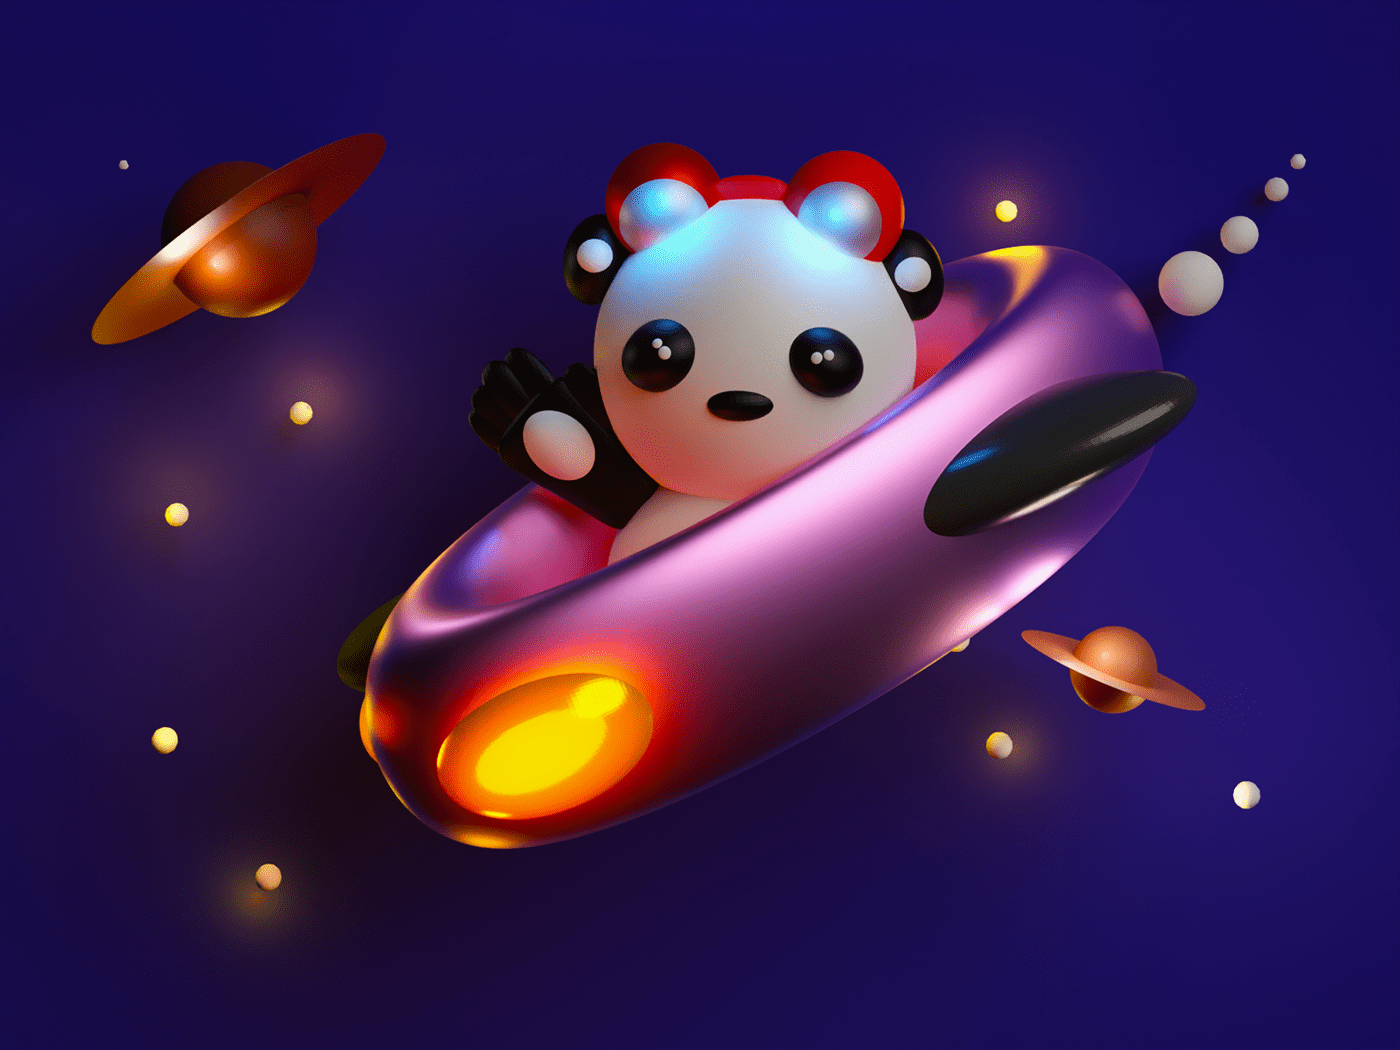 3D Blender navicella nft Panda  Panda Spaziale